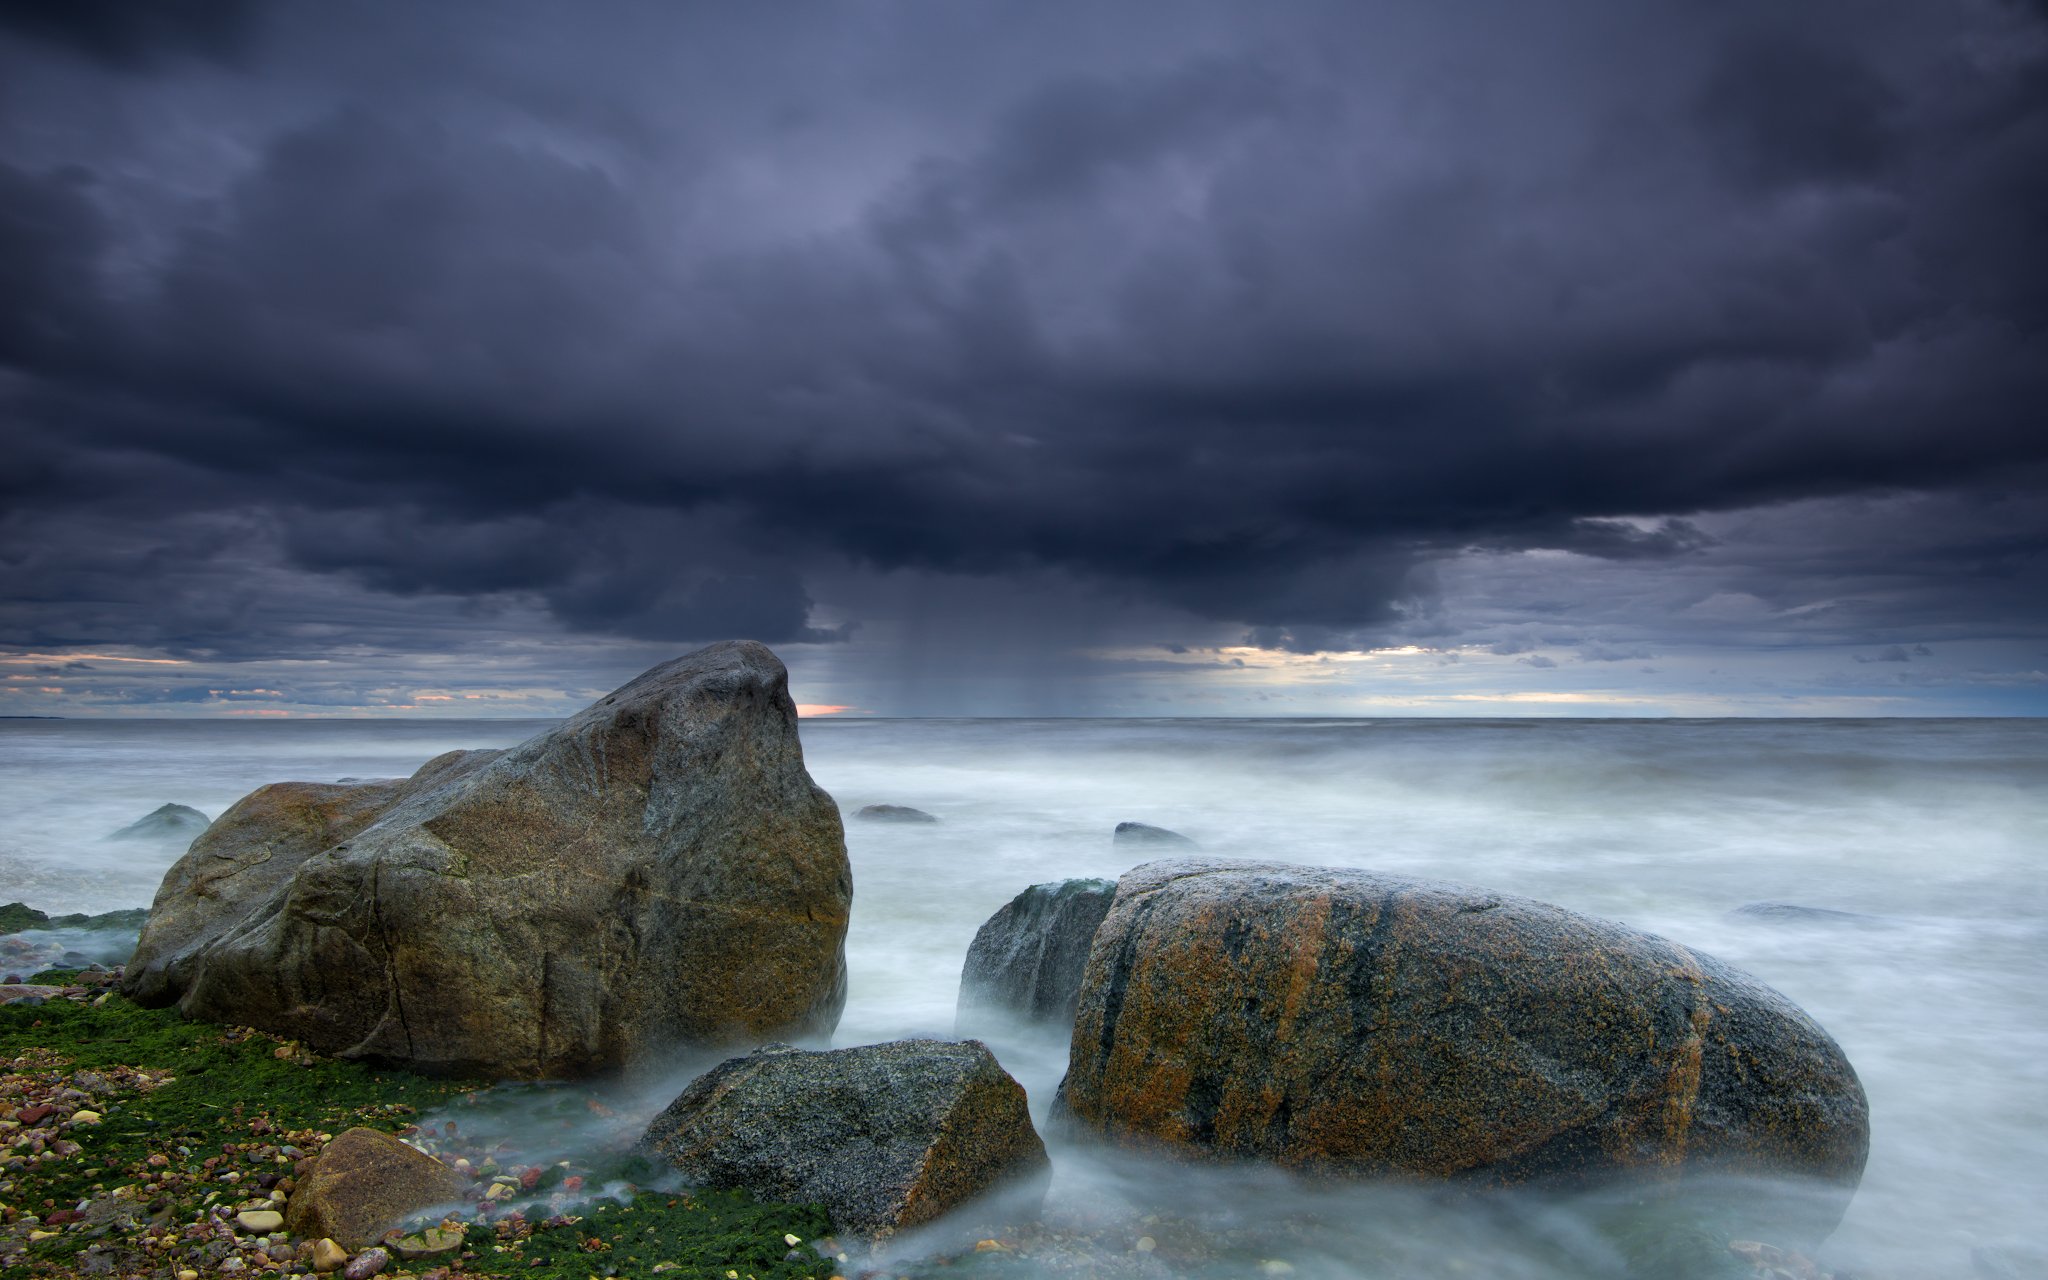 пейзаж море камни шторм вода закат, Алексей Мельситов